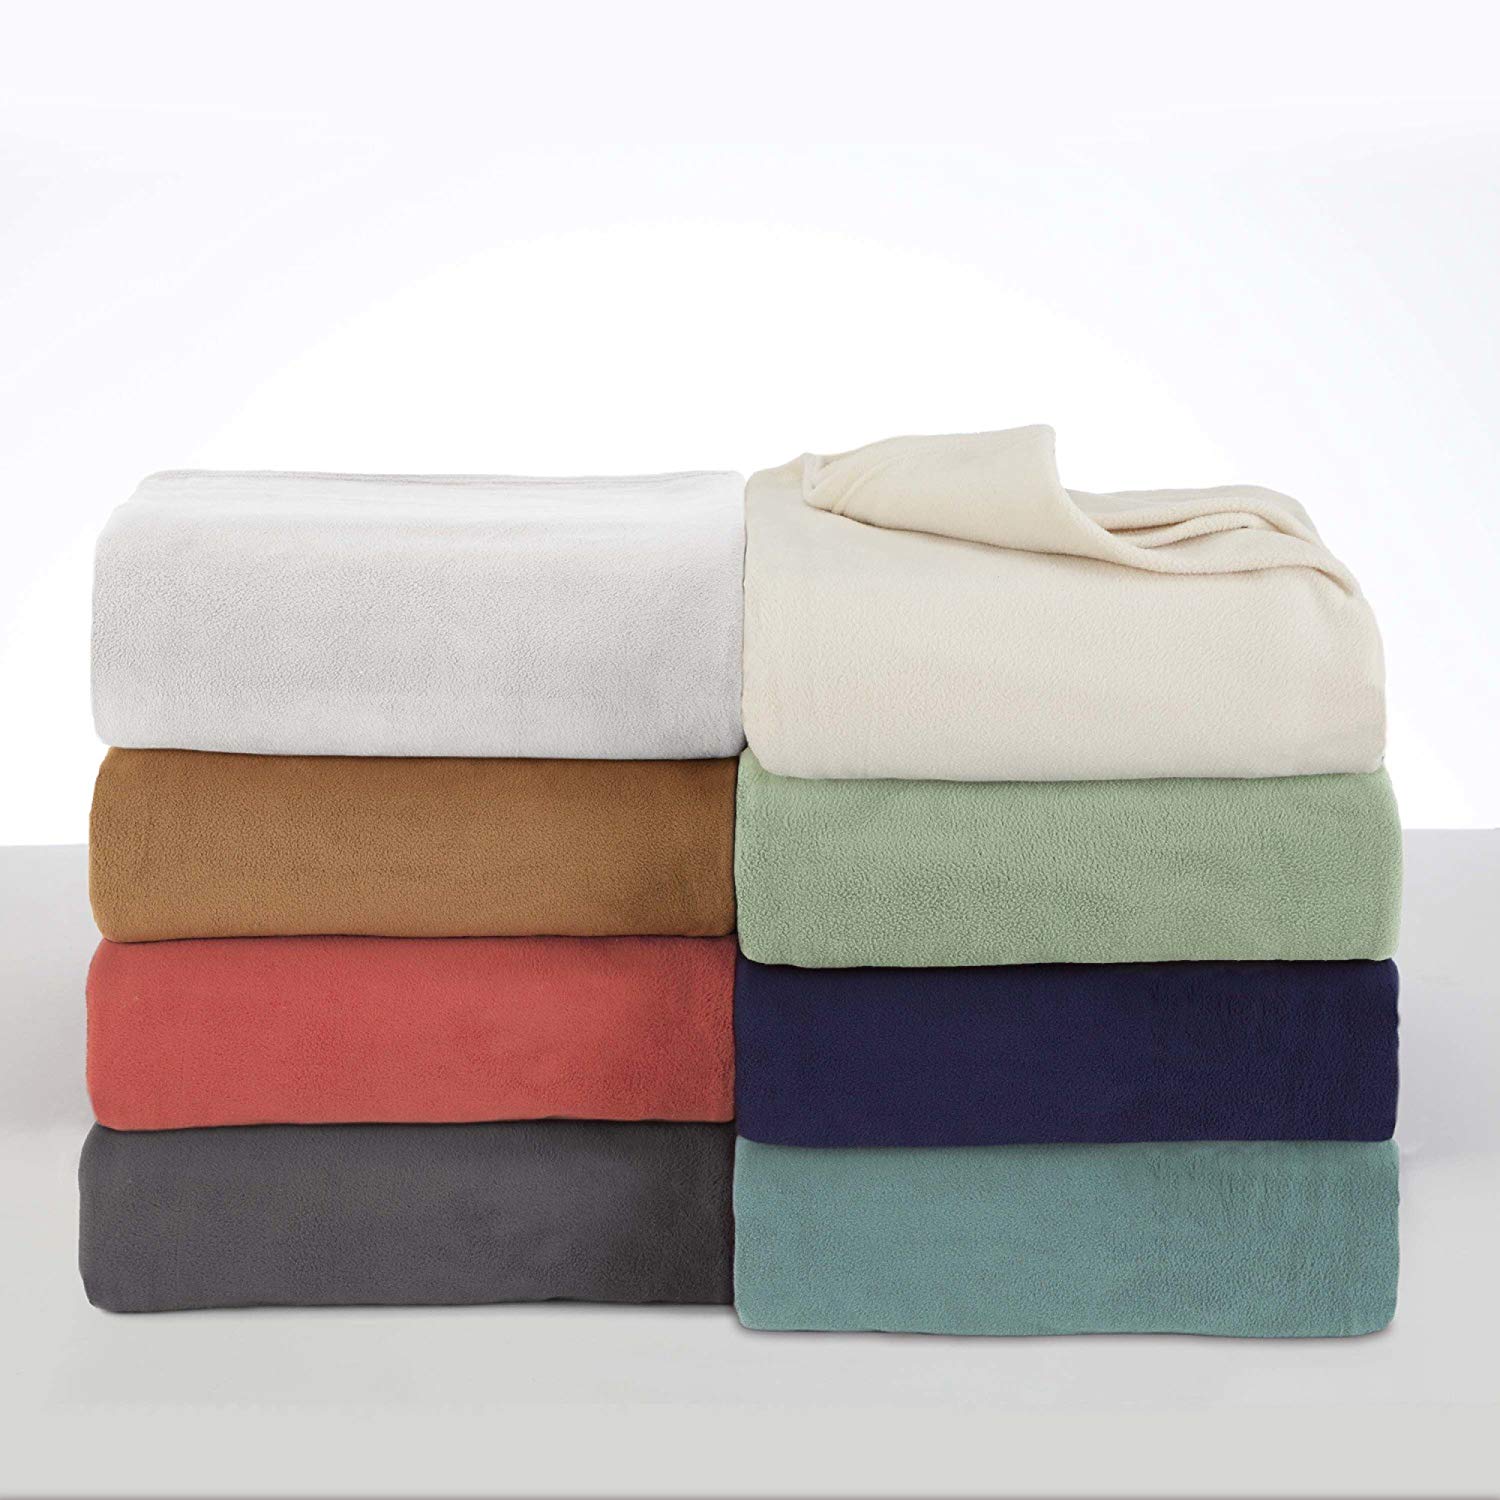 China Cheap Soft Pet-friendly Home Bed & Sofa High-quality Polar Fleece Blanket